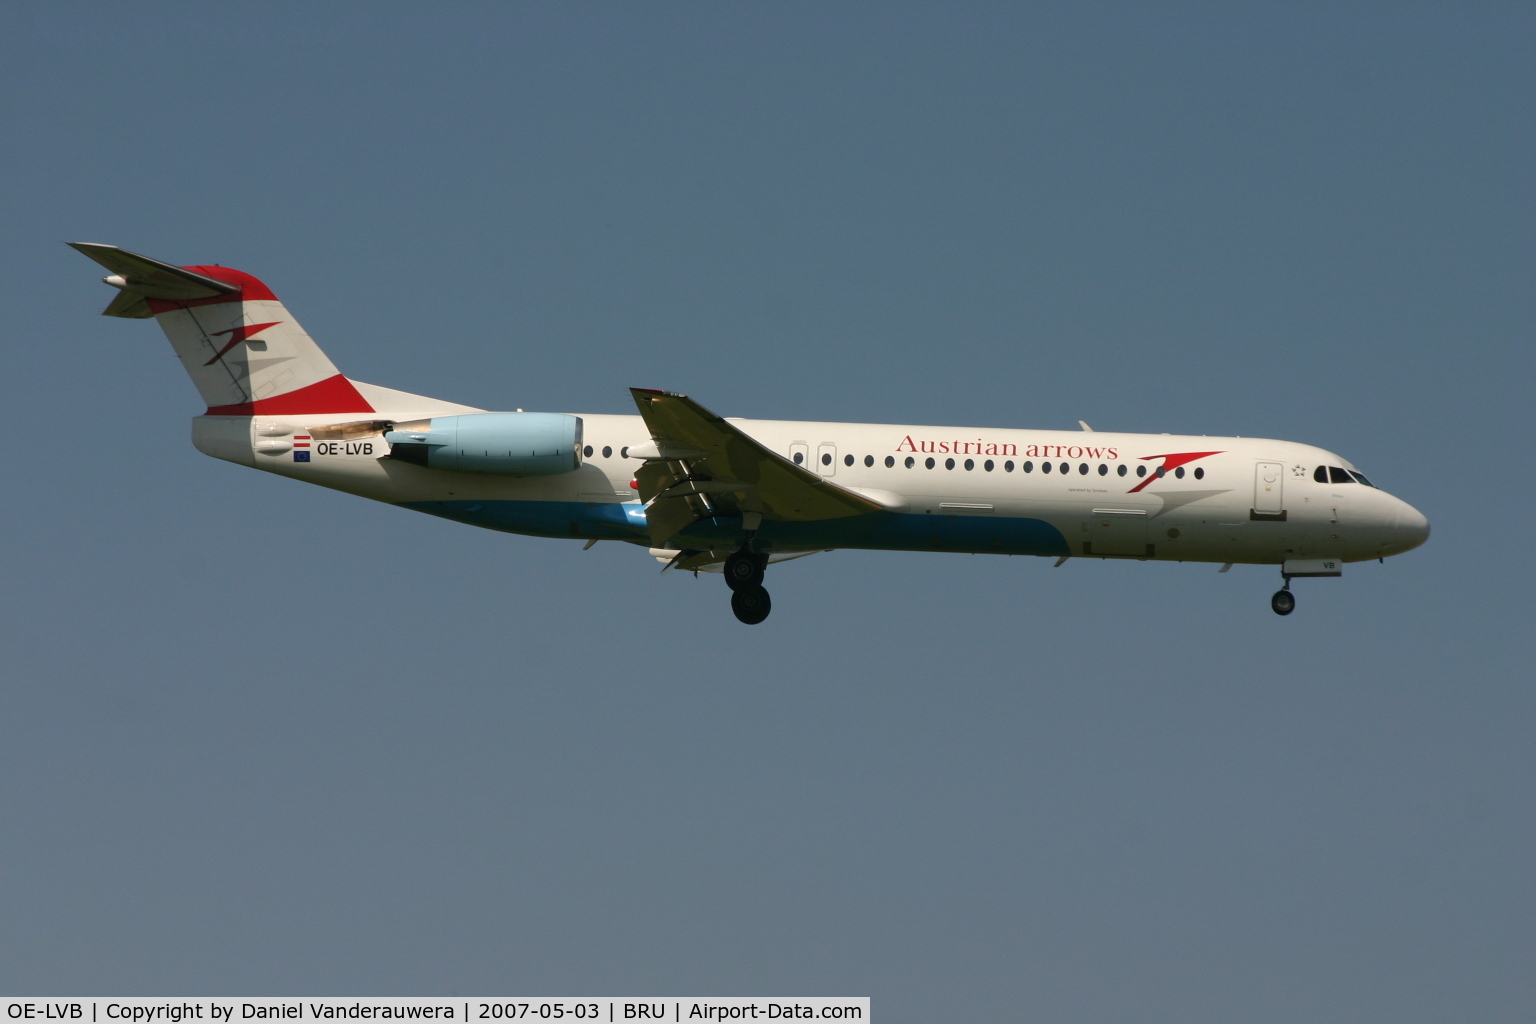 OE-LVB, 1994 Fokker 100 (F-28-0100) C/N 11502, flight OS367 is descending to rwy 02